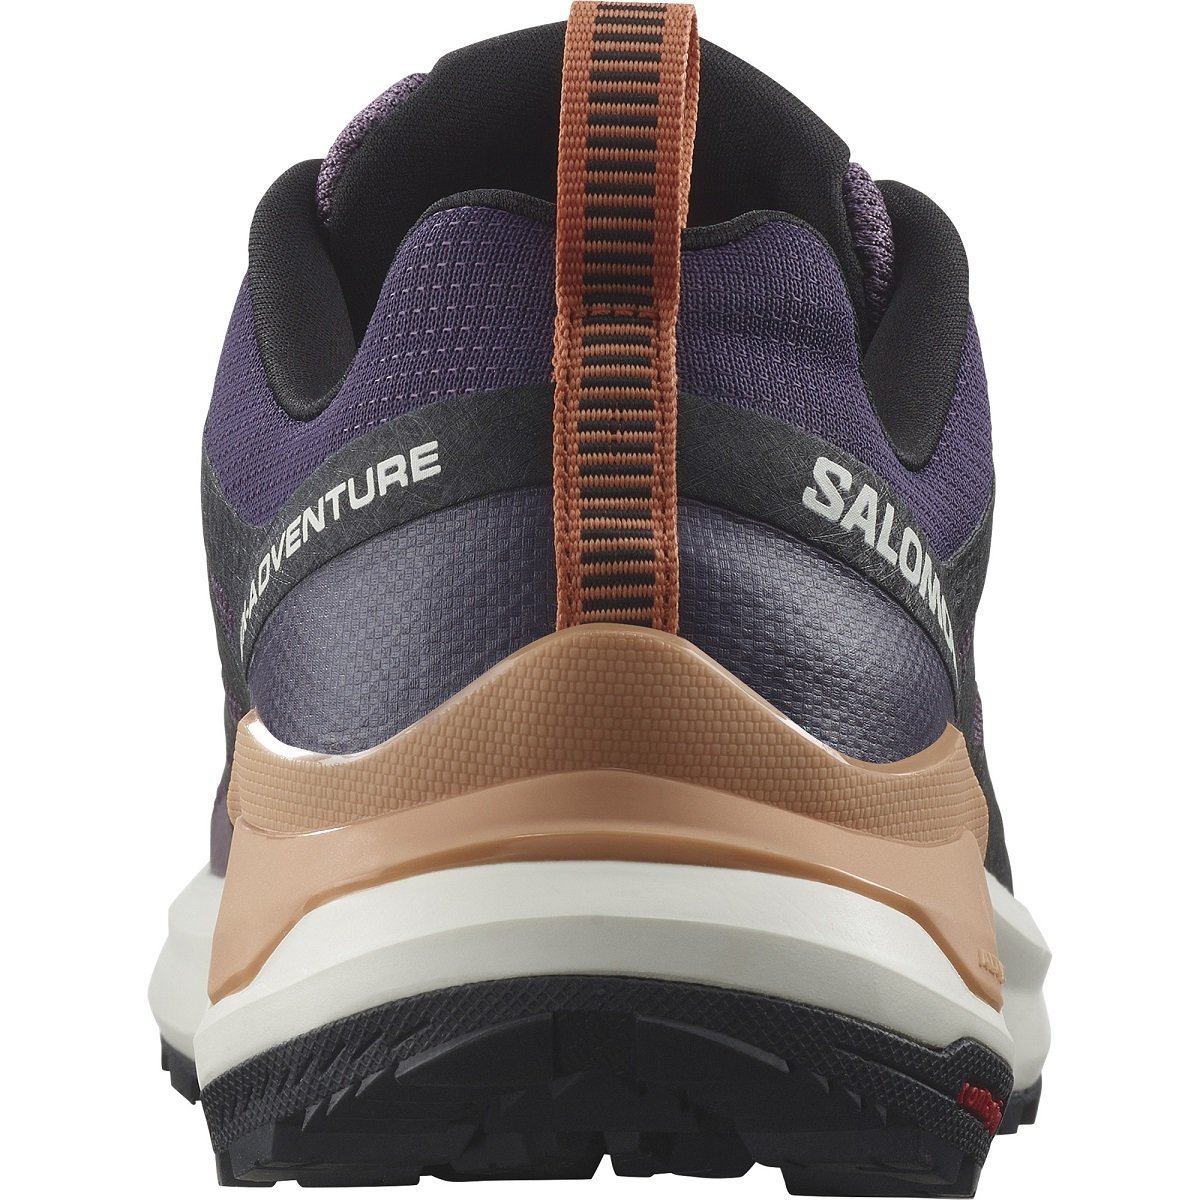 Topánky Salomon X-Adventure W - purple